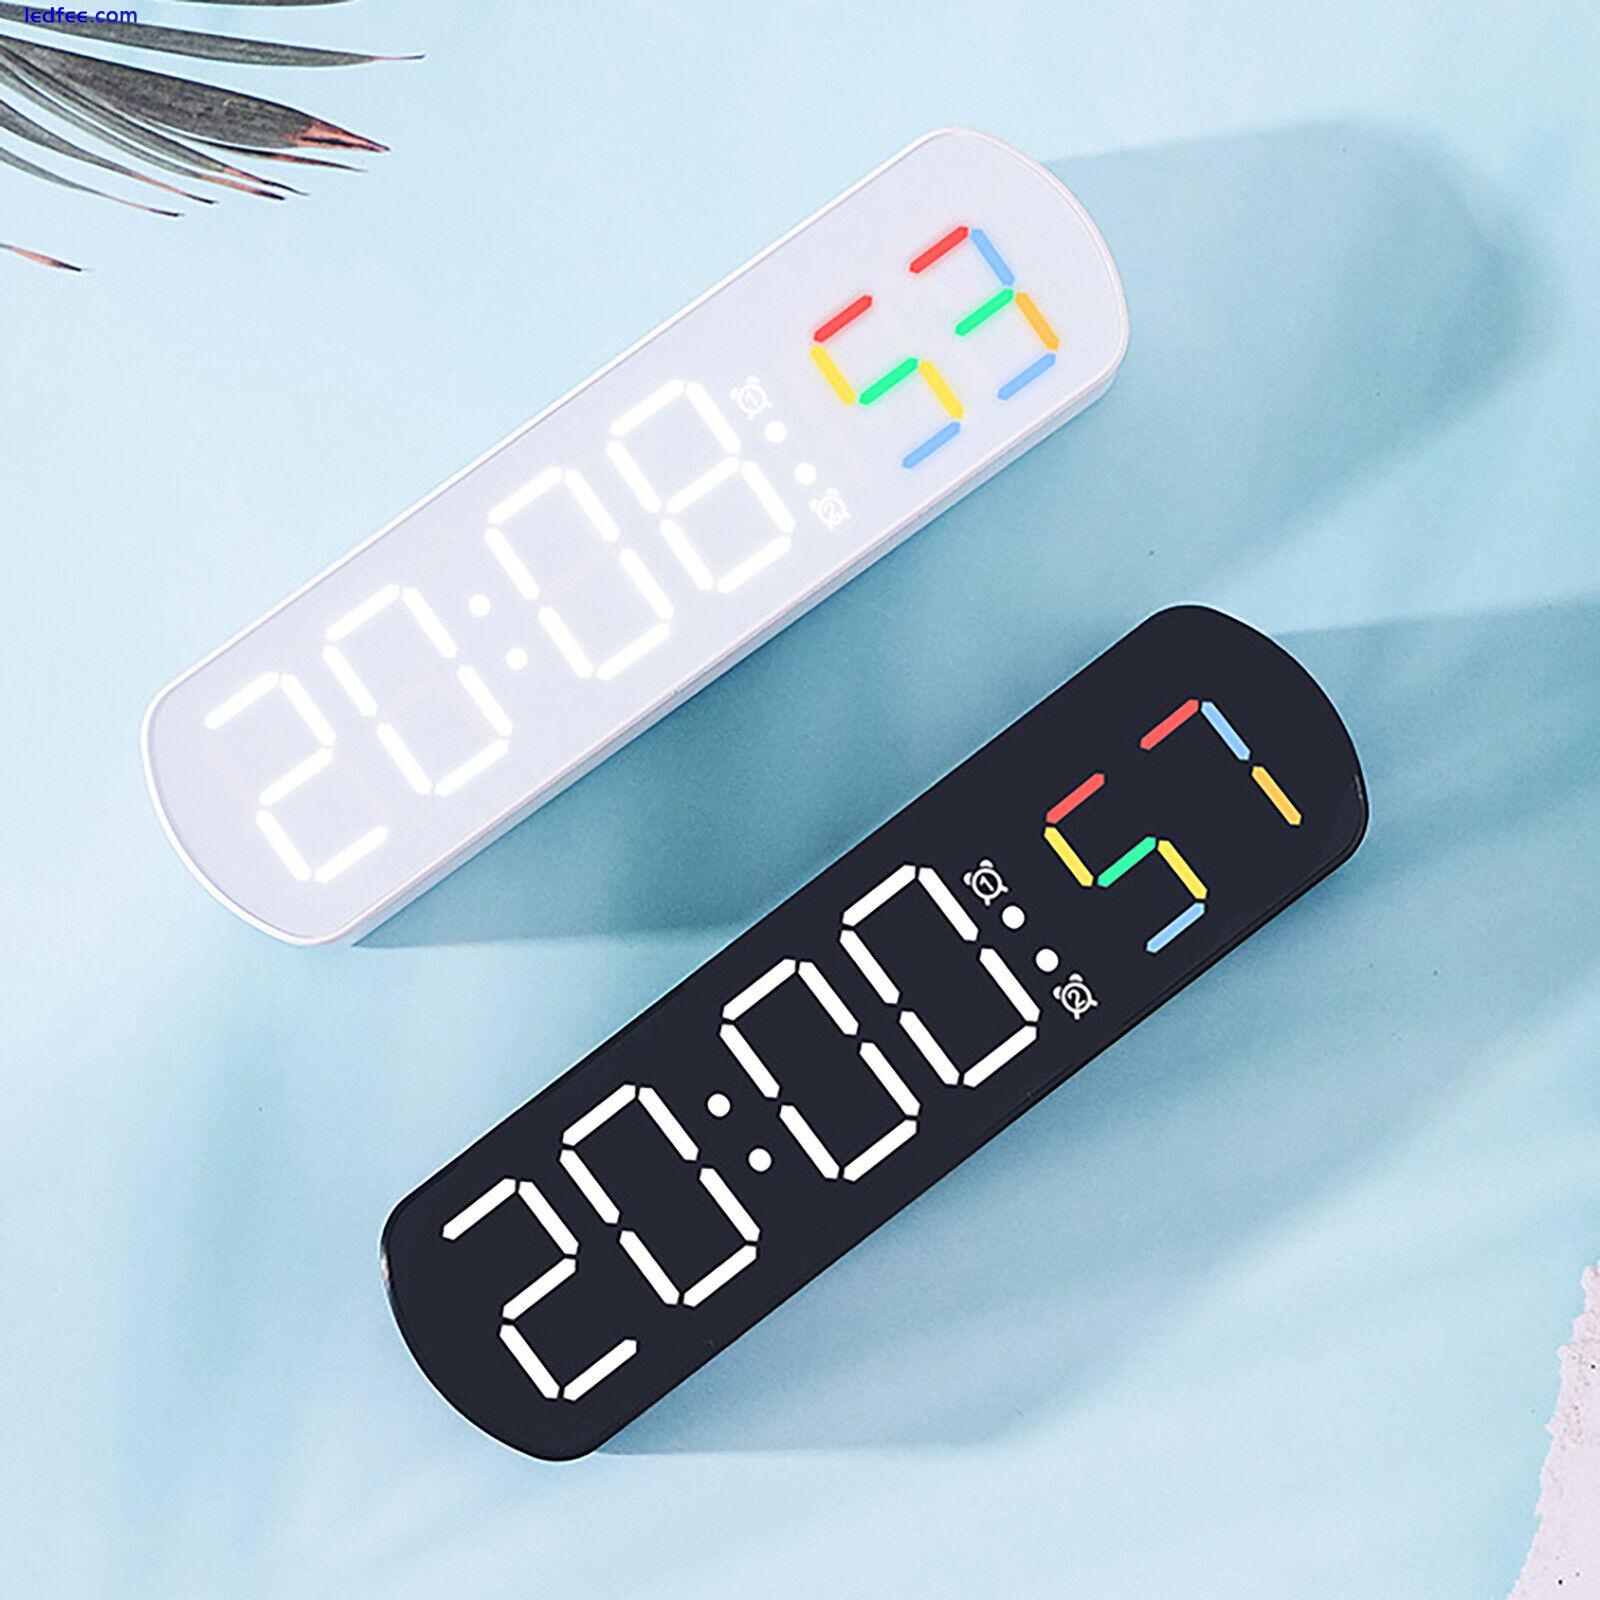 LED Electric Digital Alarm Clock with Temperature Date Display Bedside Clocks 0 